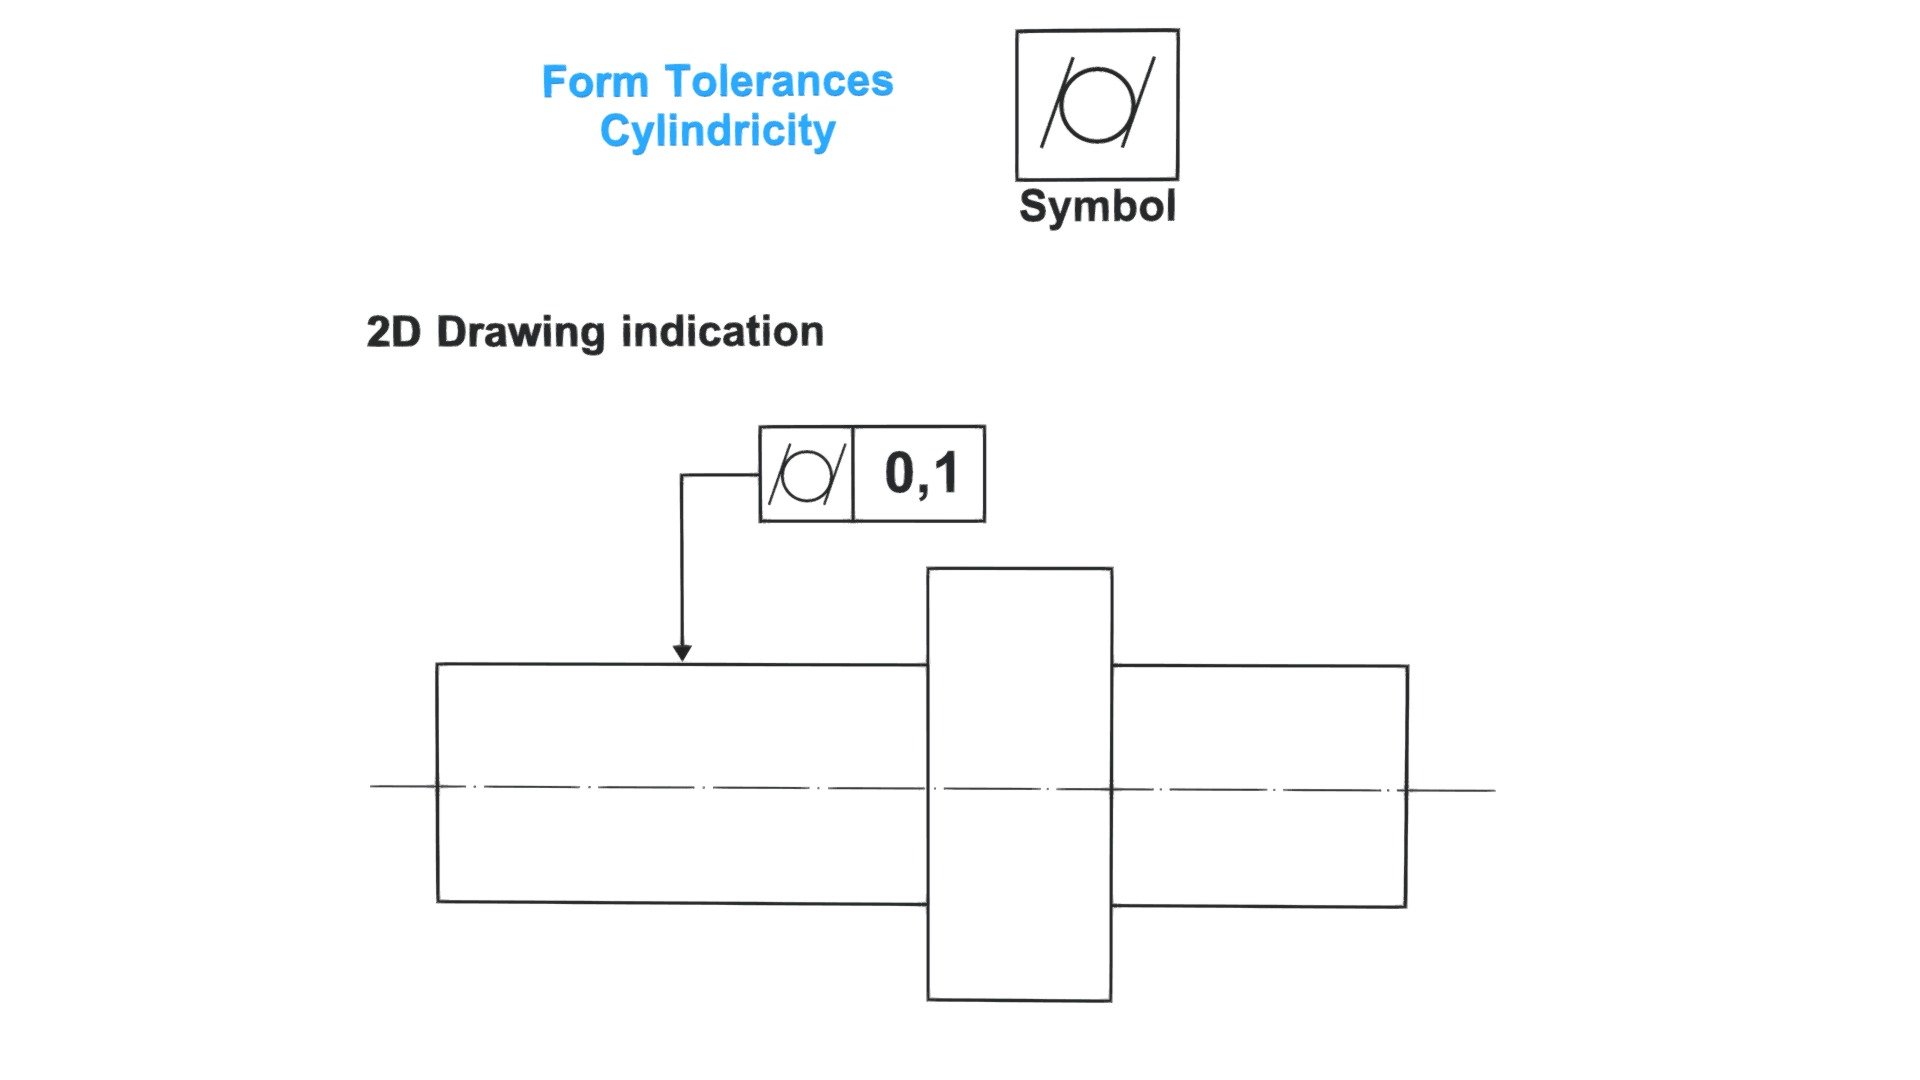 Form Tolerances Cylindricity